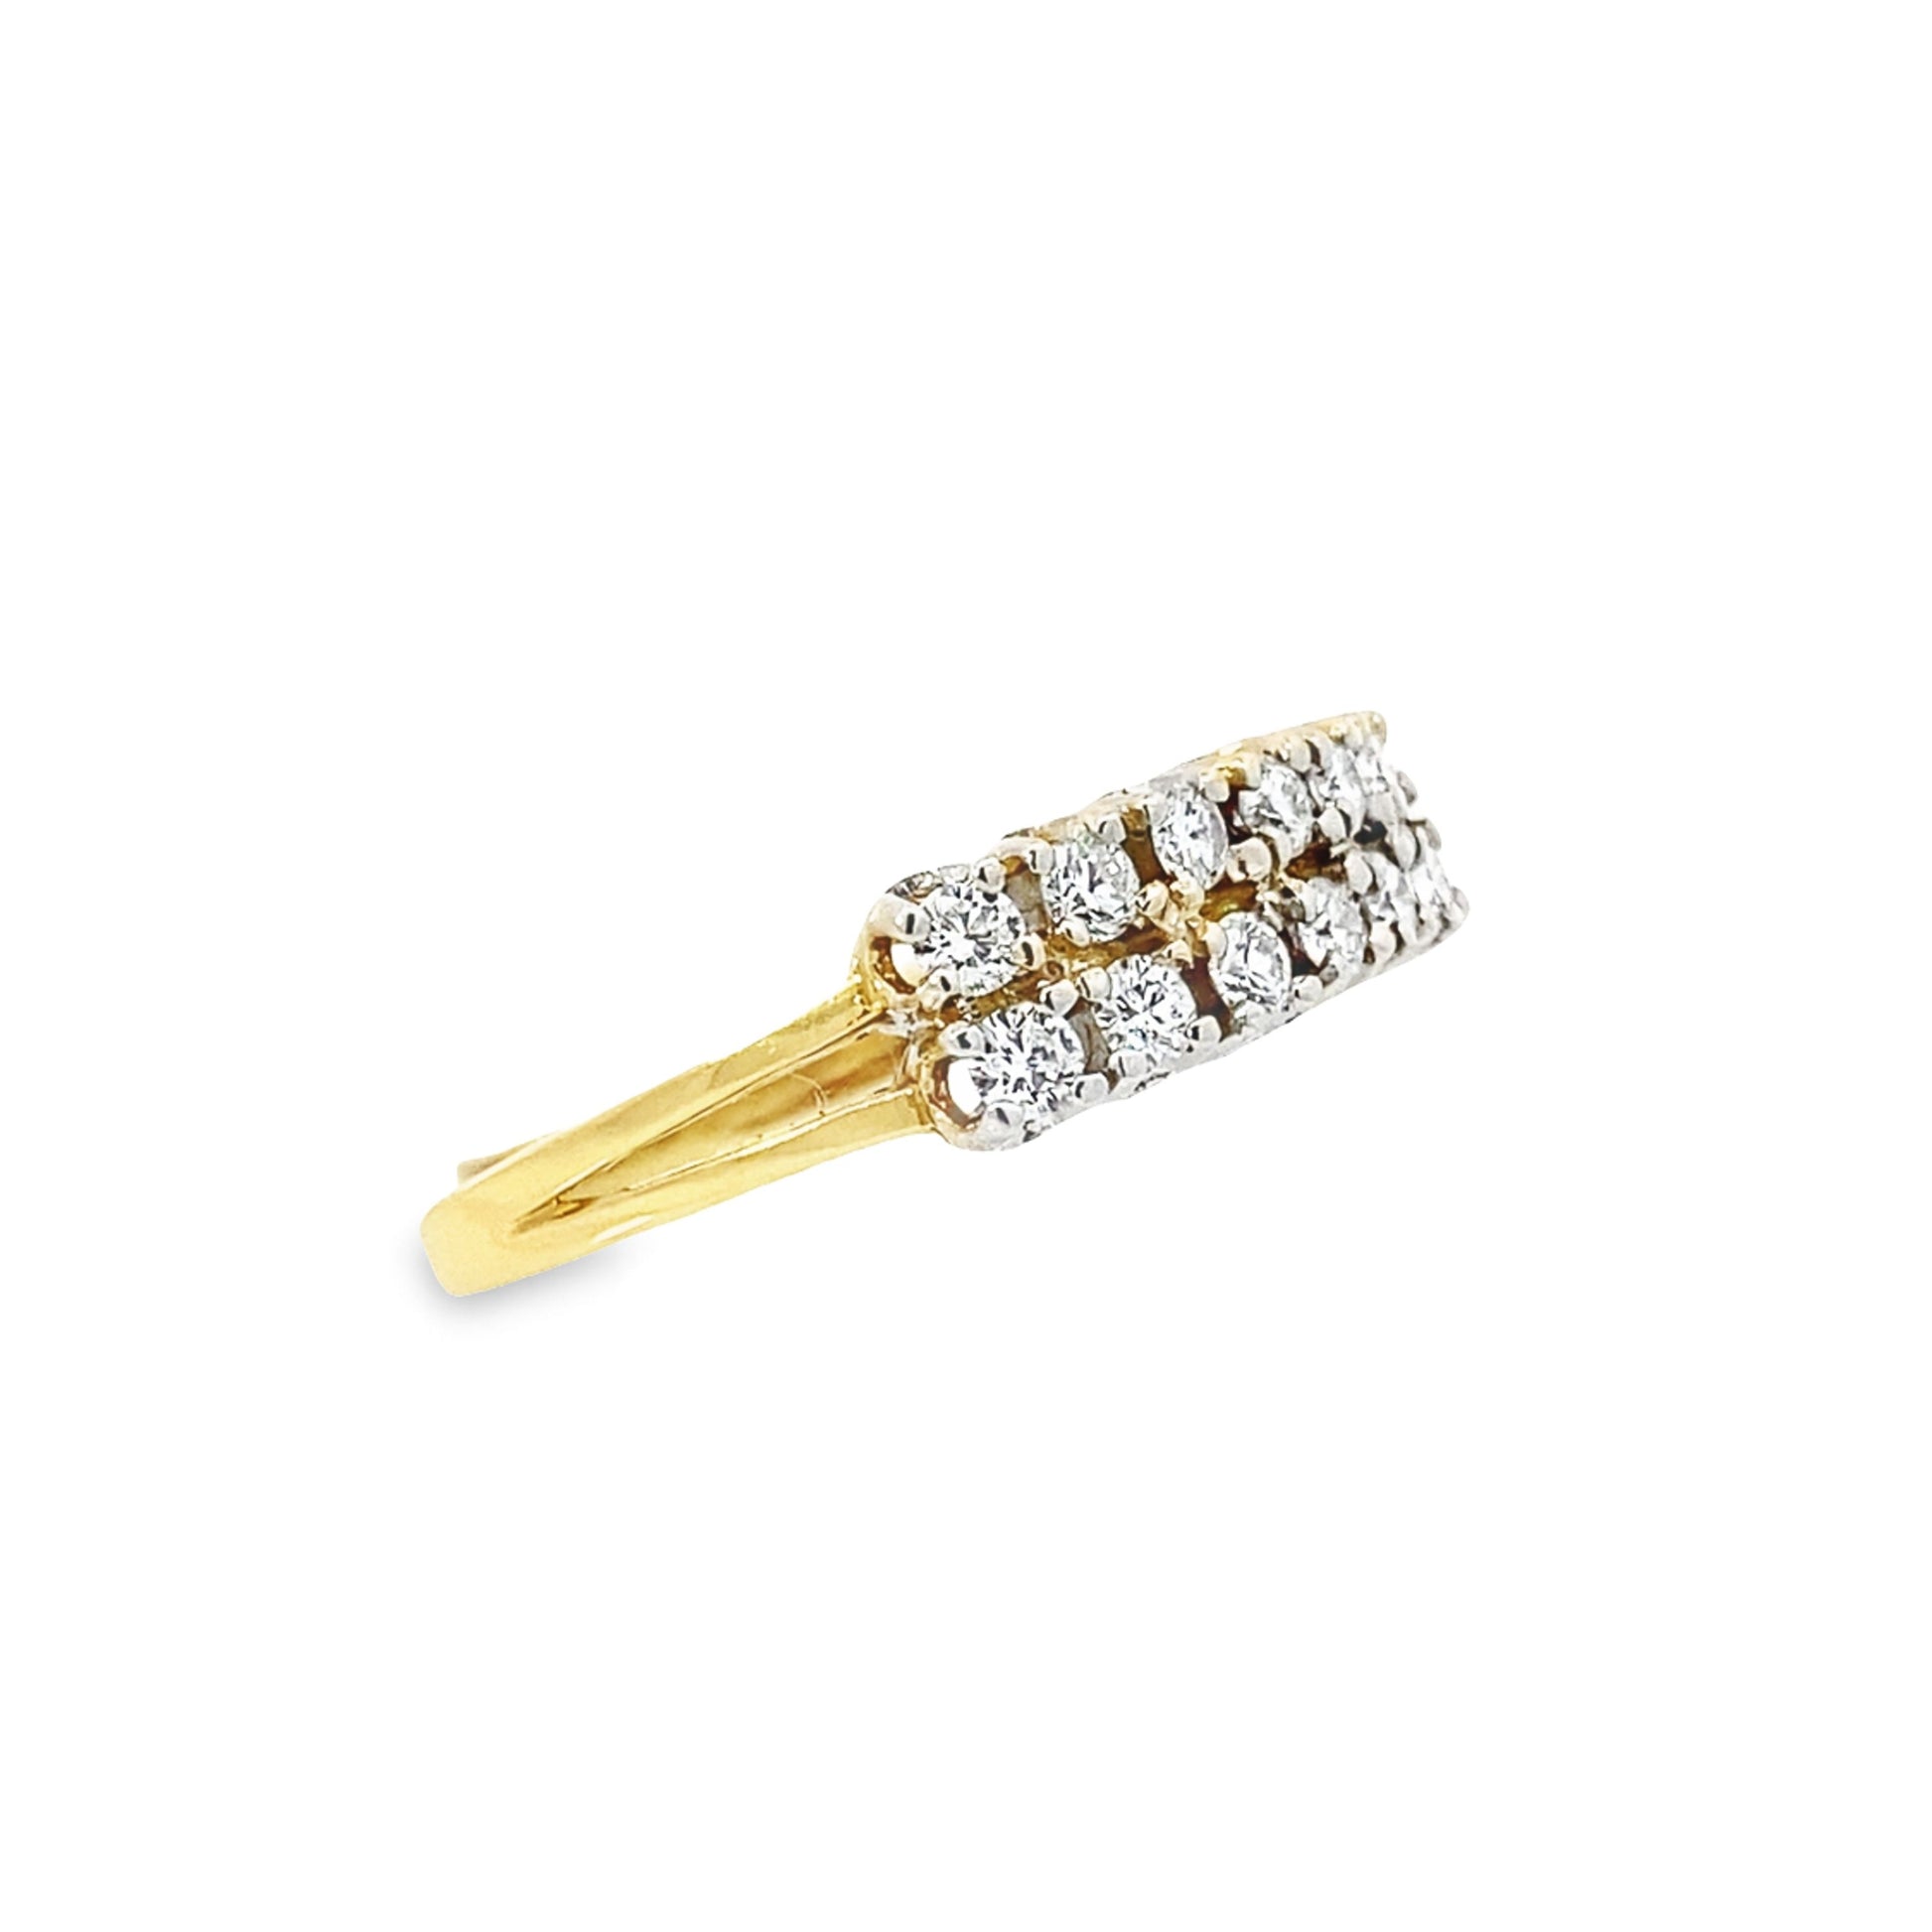 14K Two Tone Gold Diamond Fashion Ring Size 7.5 3.0Dwt